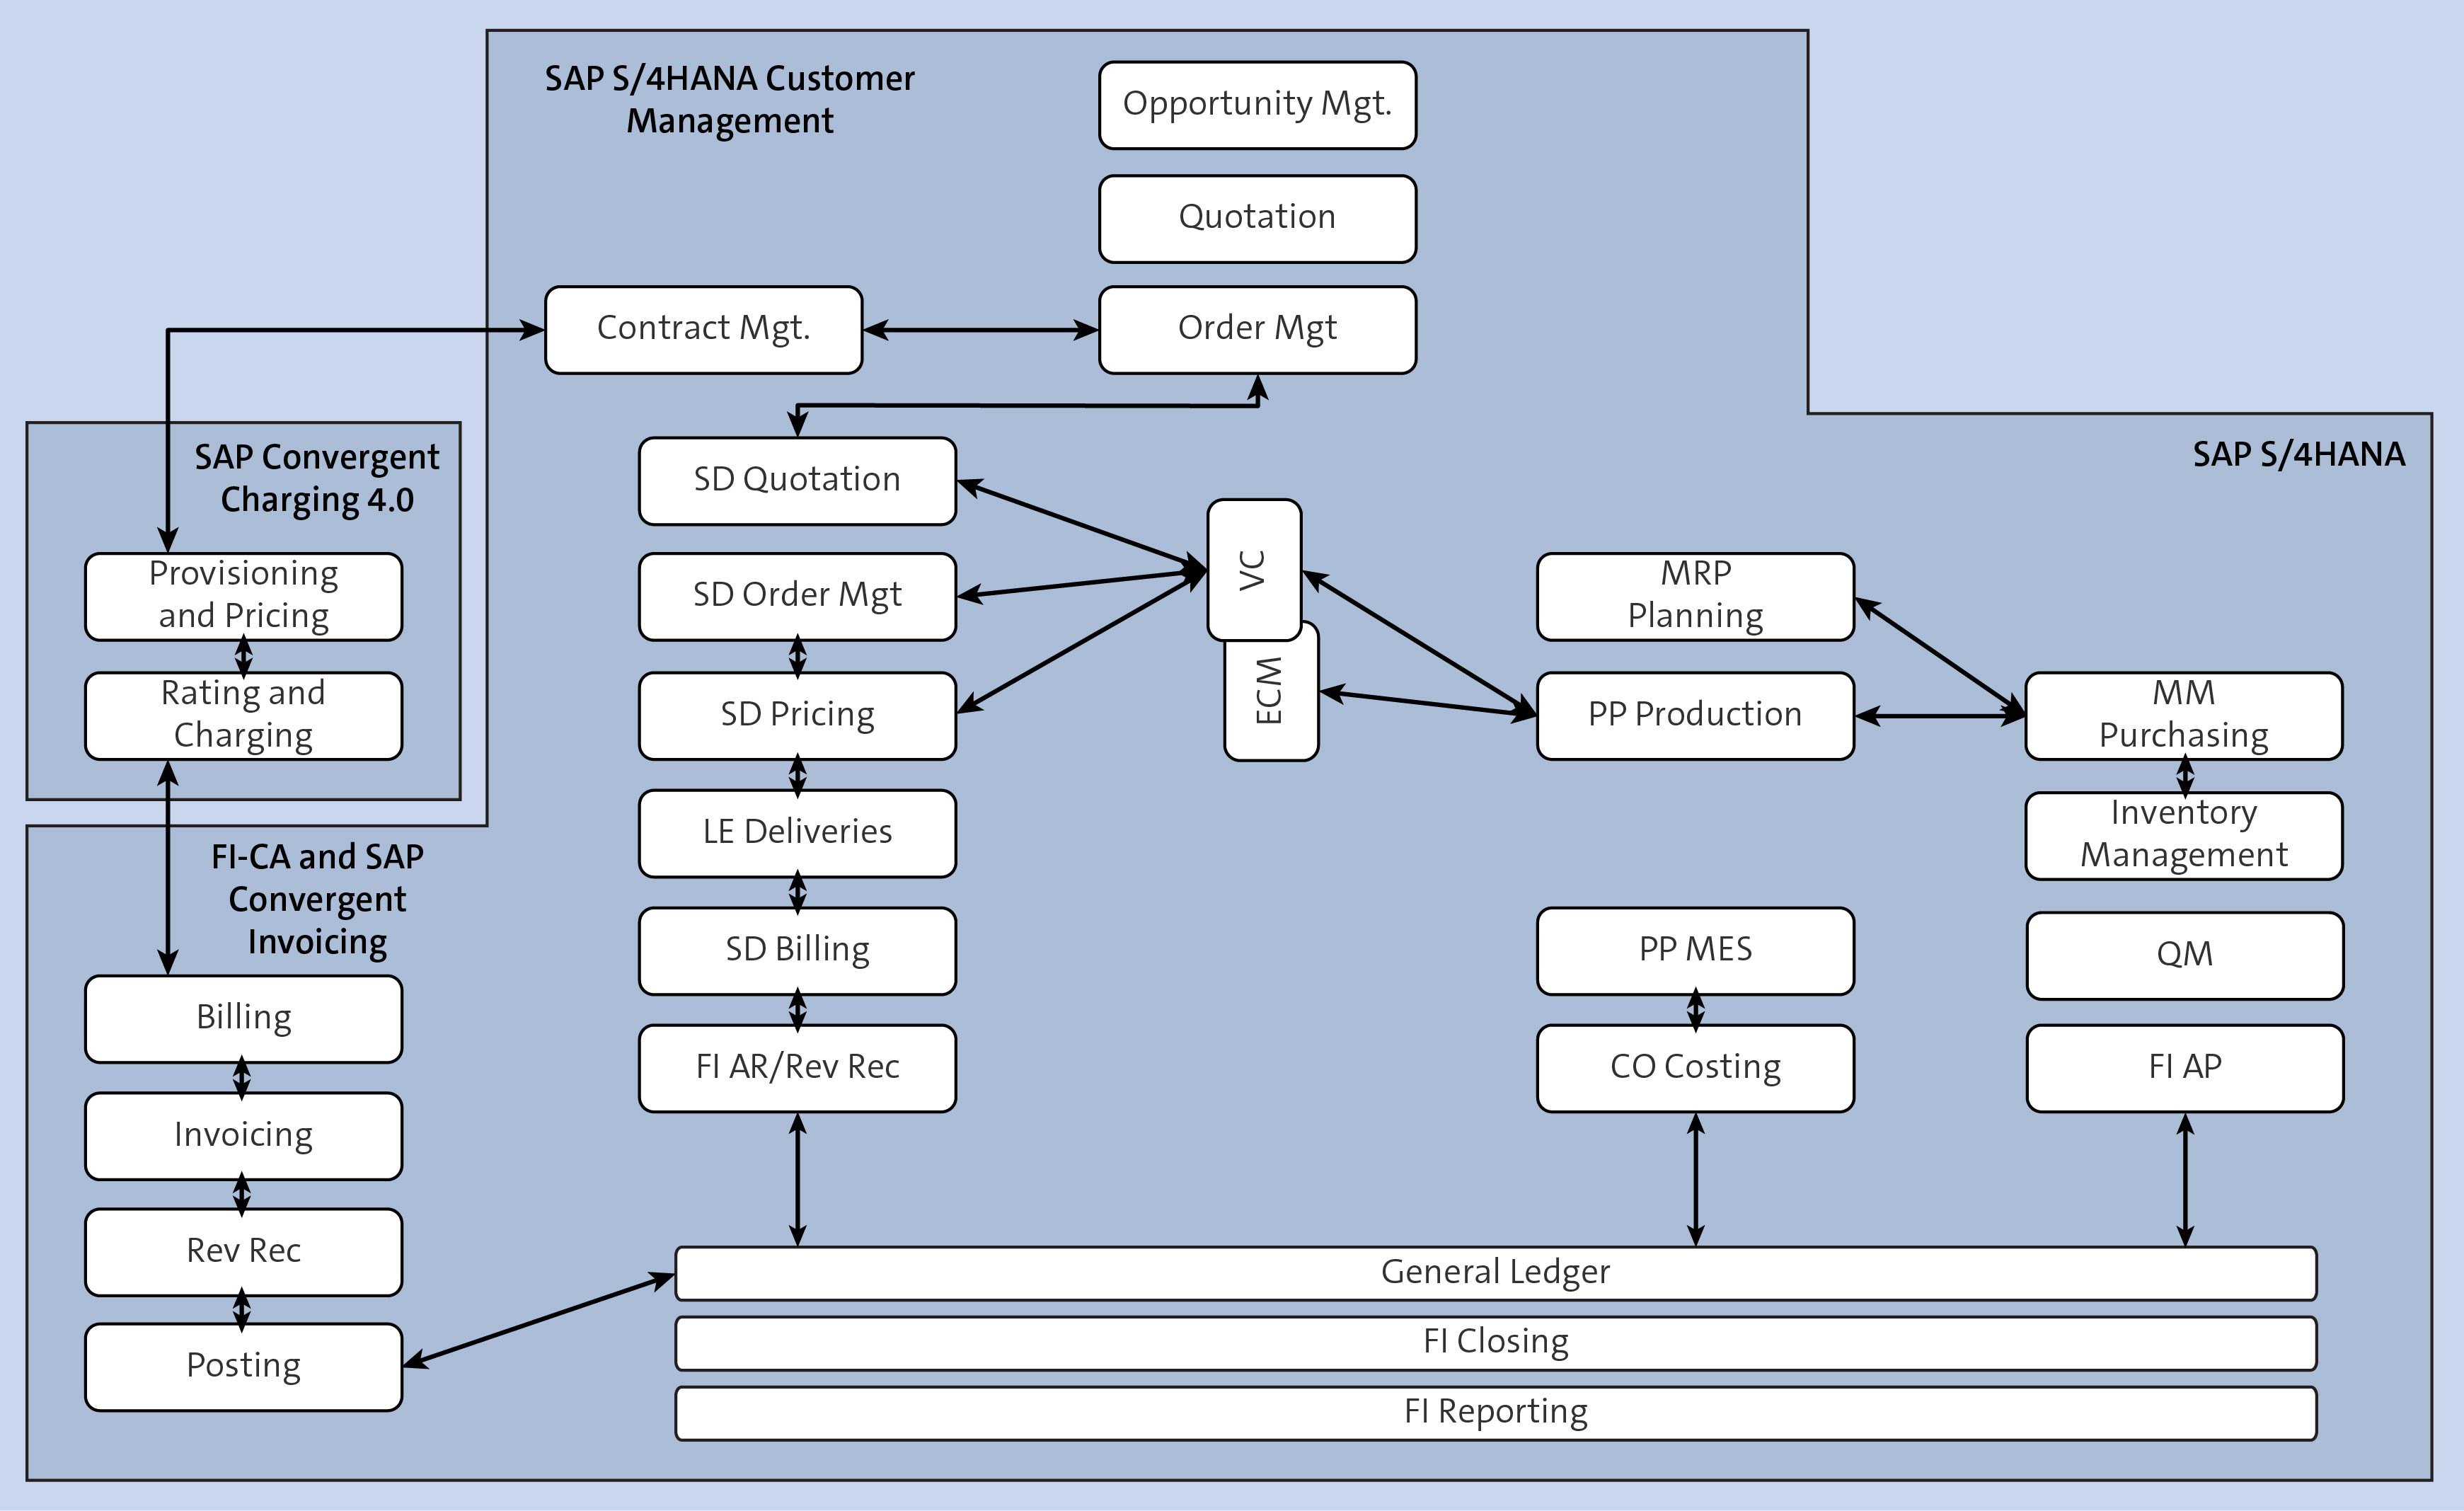 sap download manager v1.1 system requirements pdf